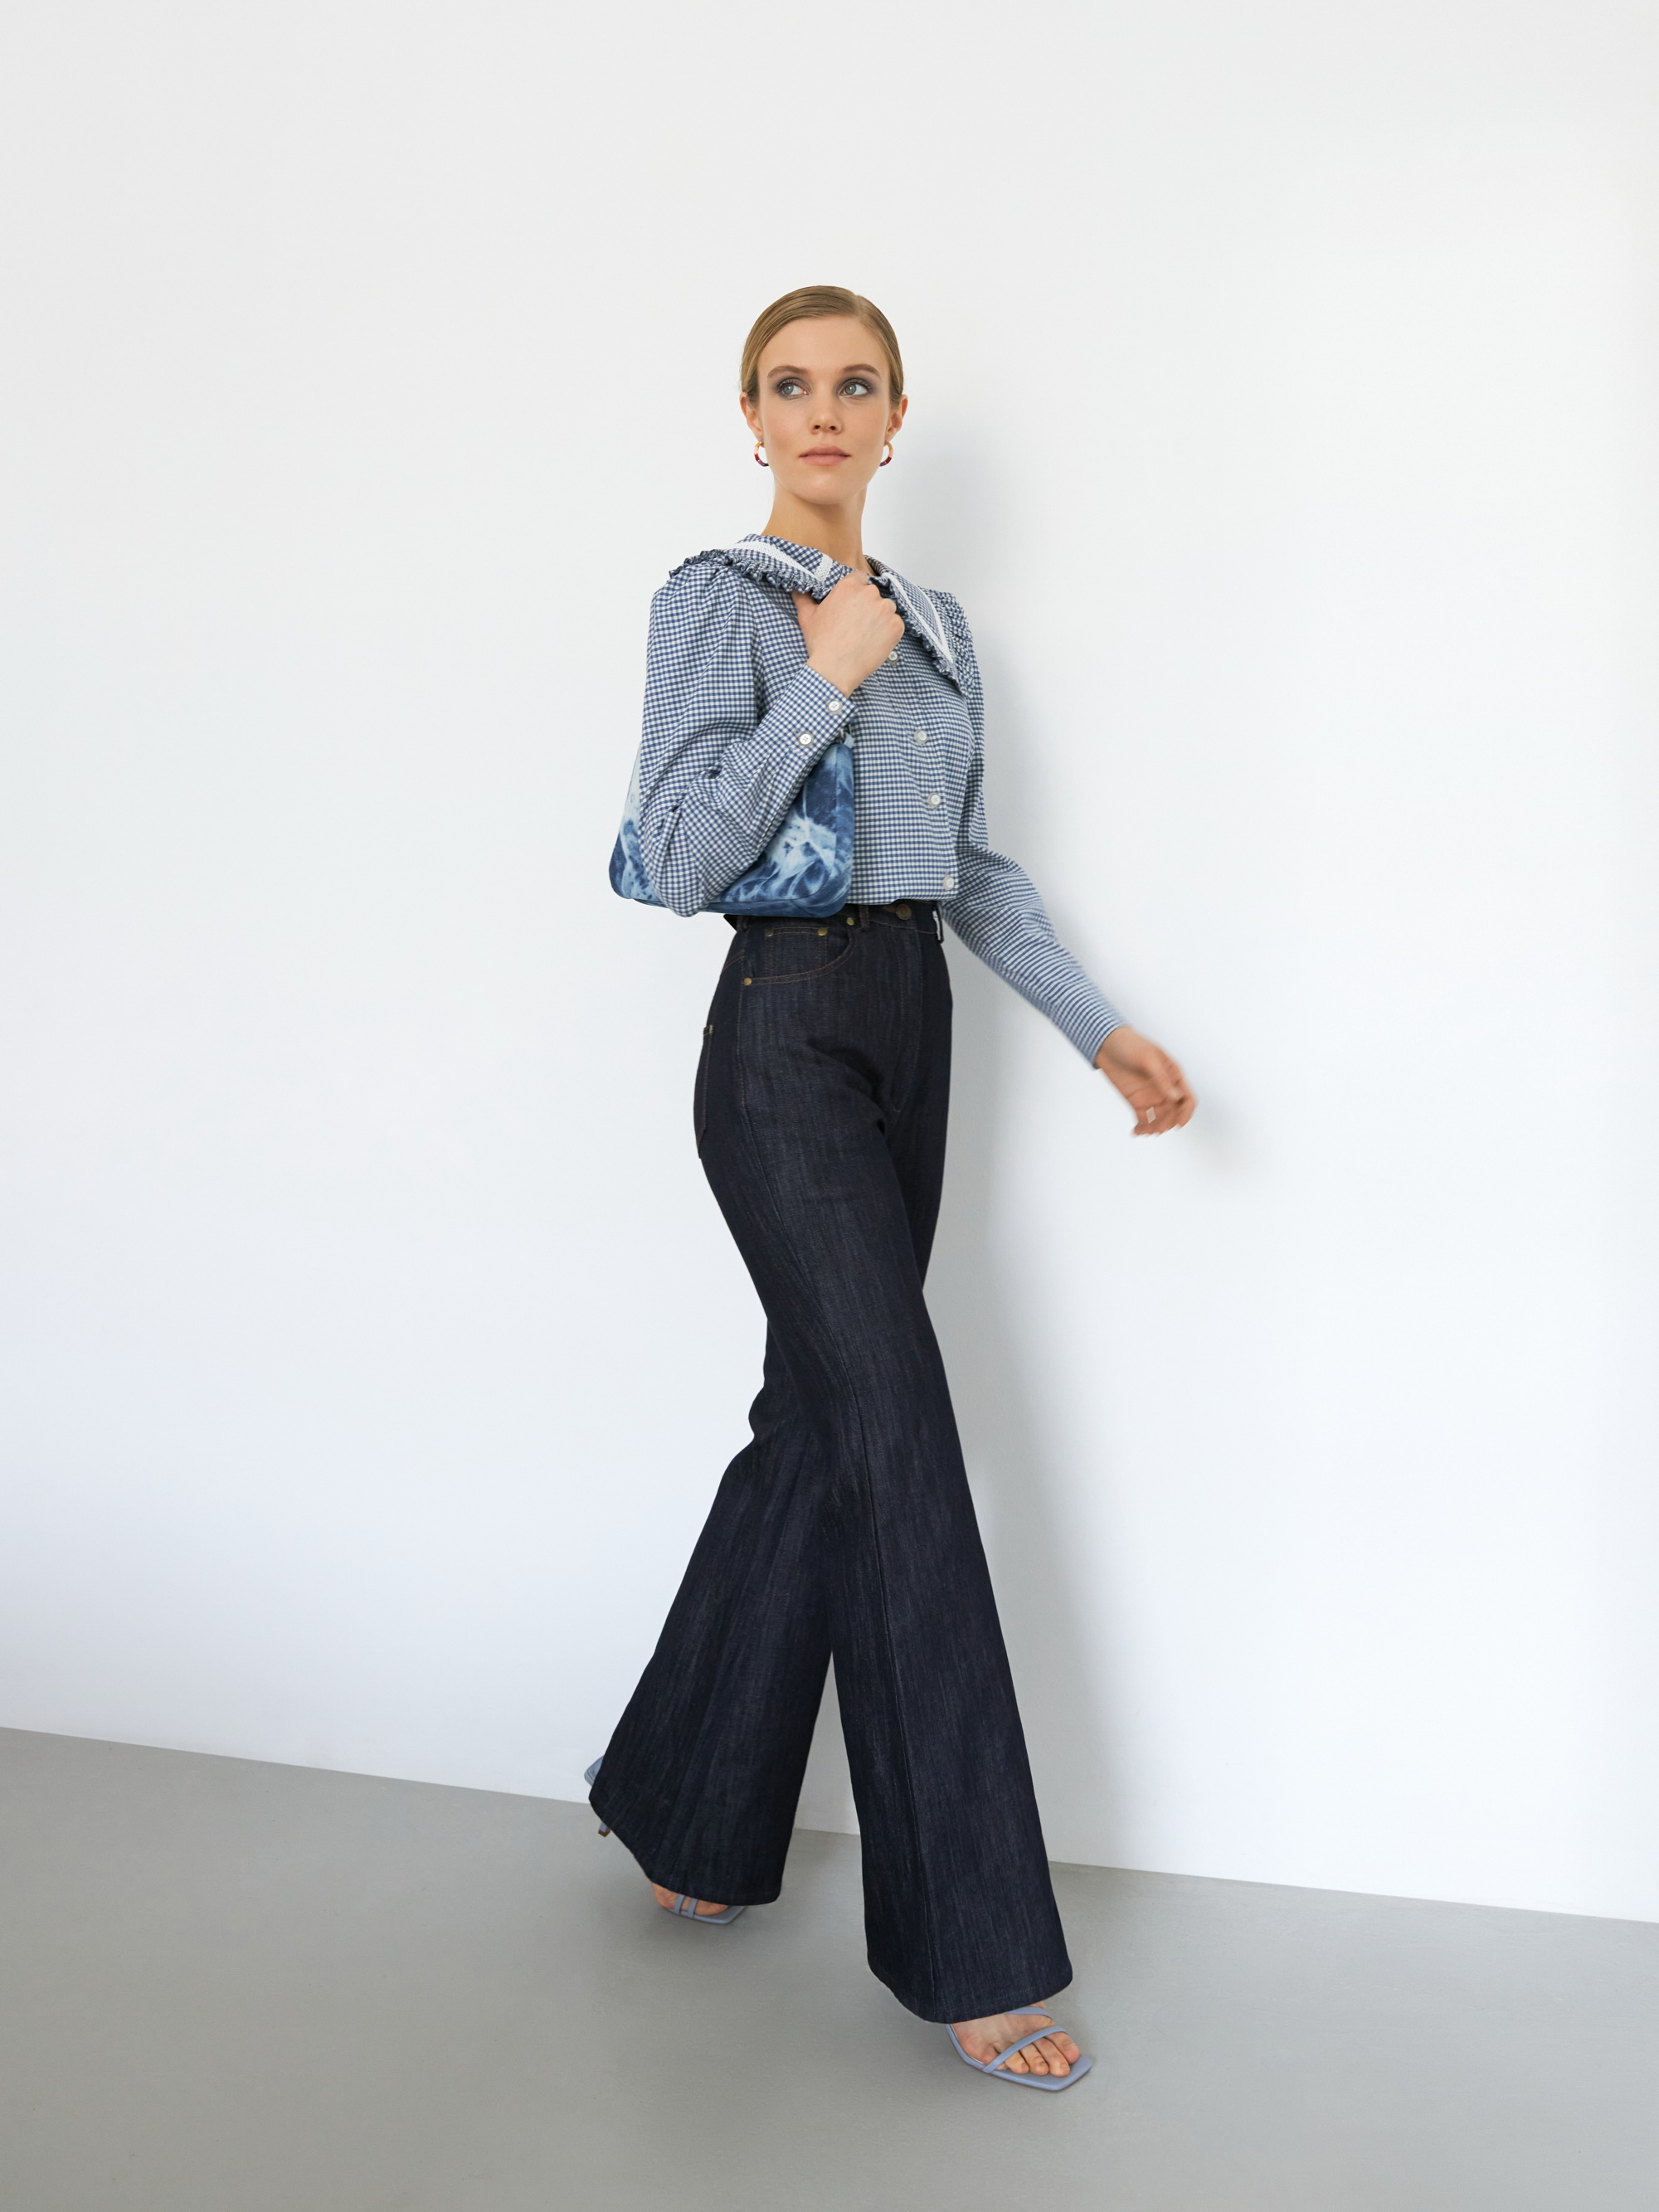 Trousers, pattern №197 buy on-line